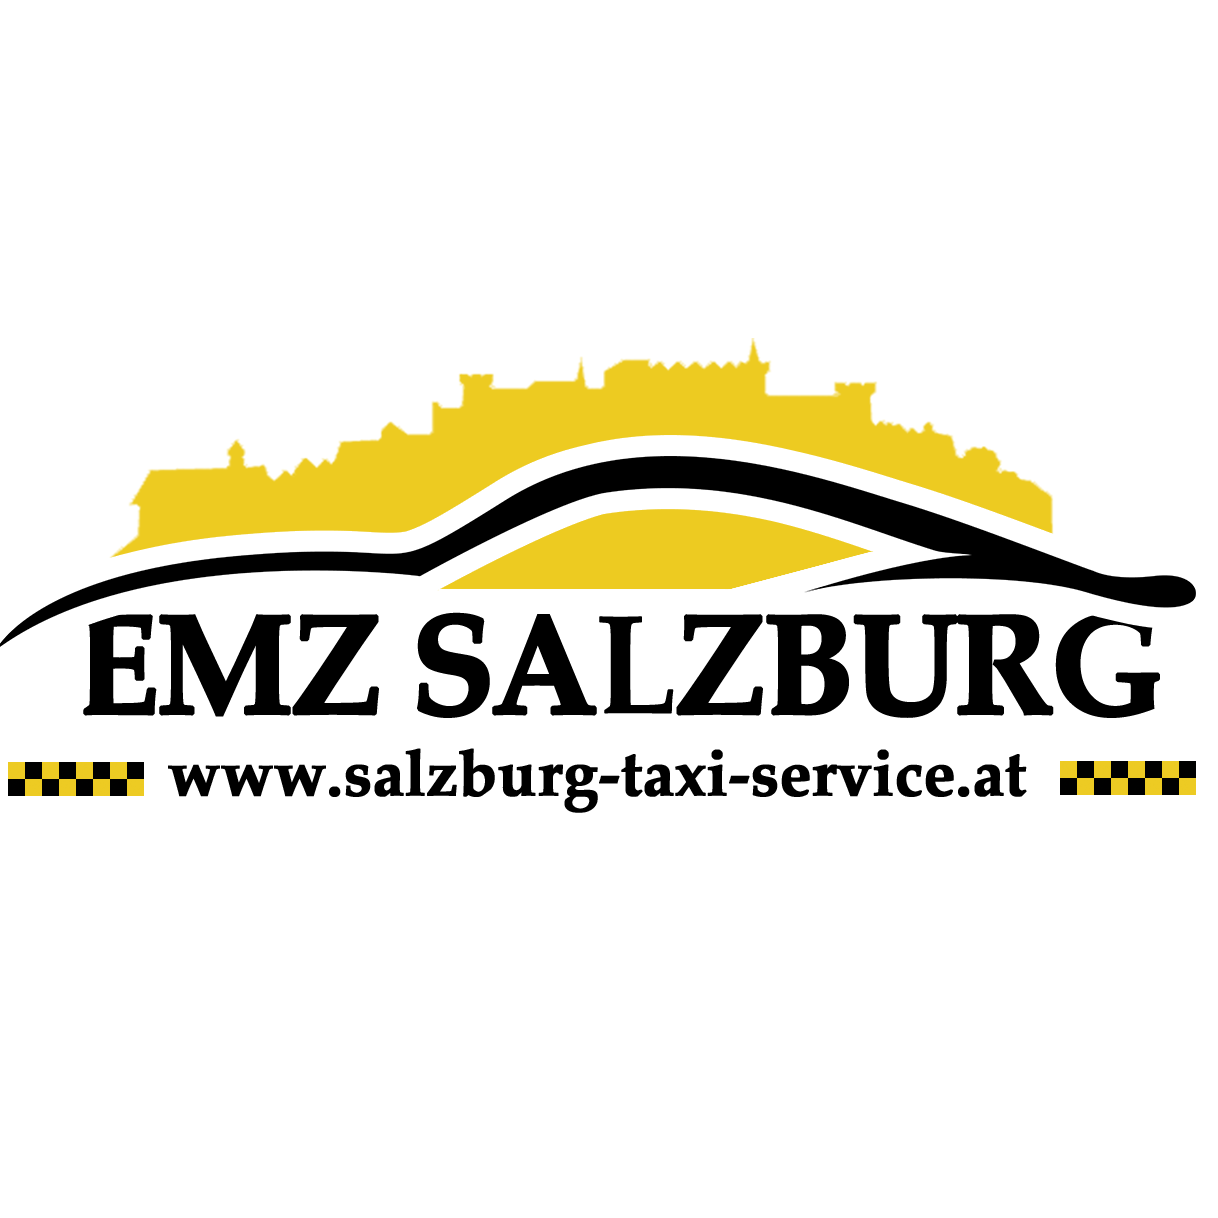 EMZ - Taxi Transfer Service Salzburg Logo